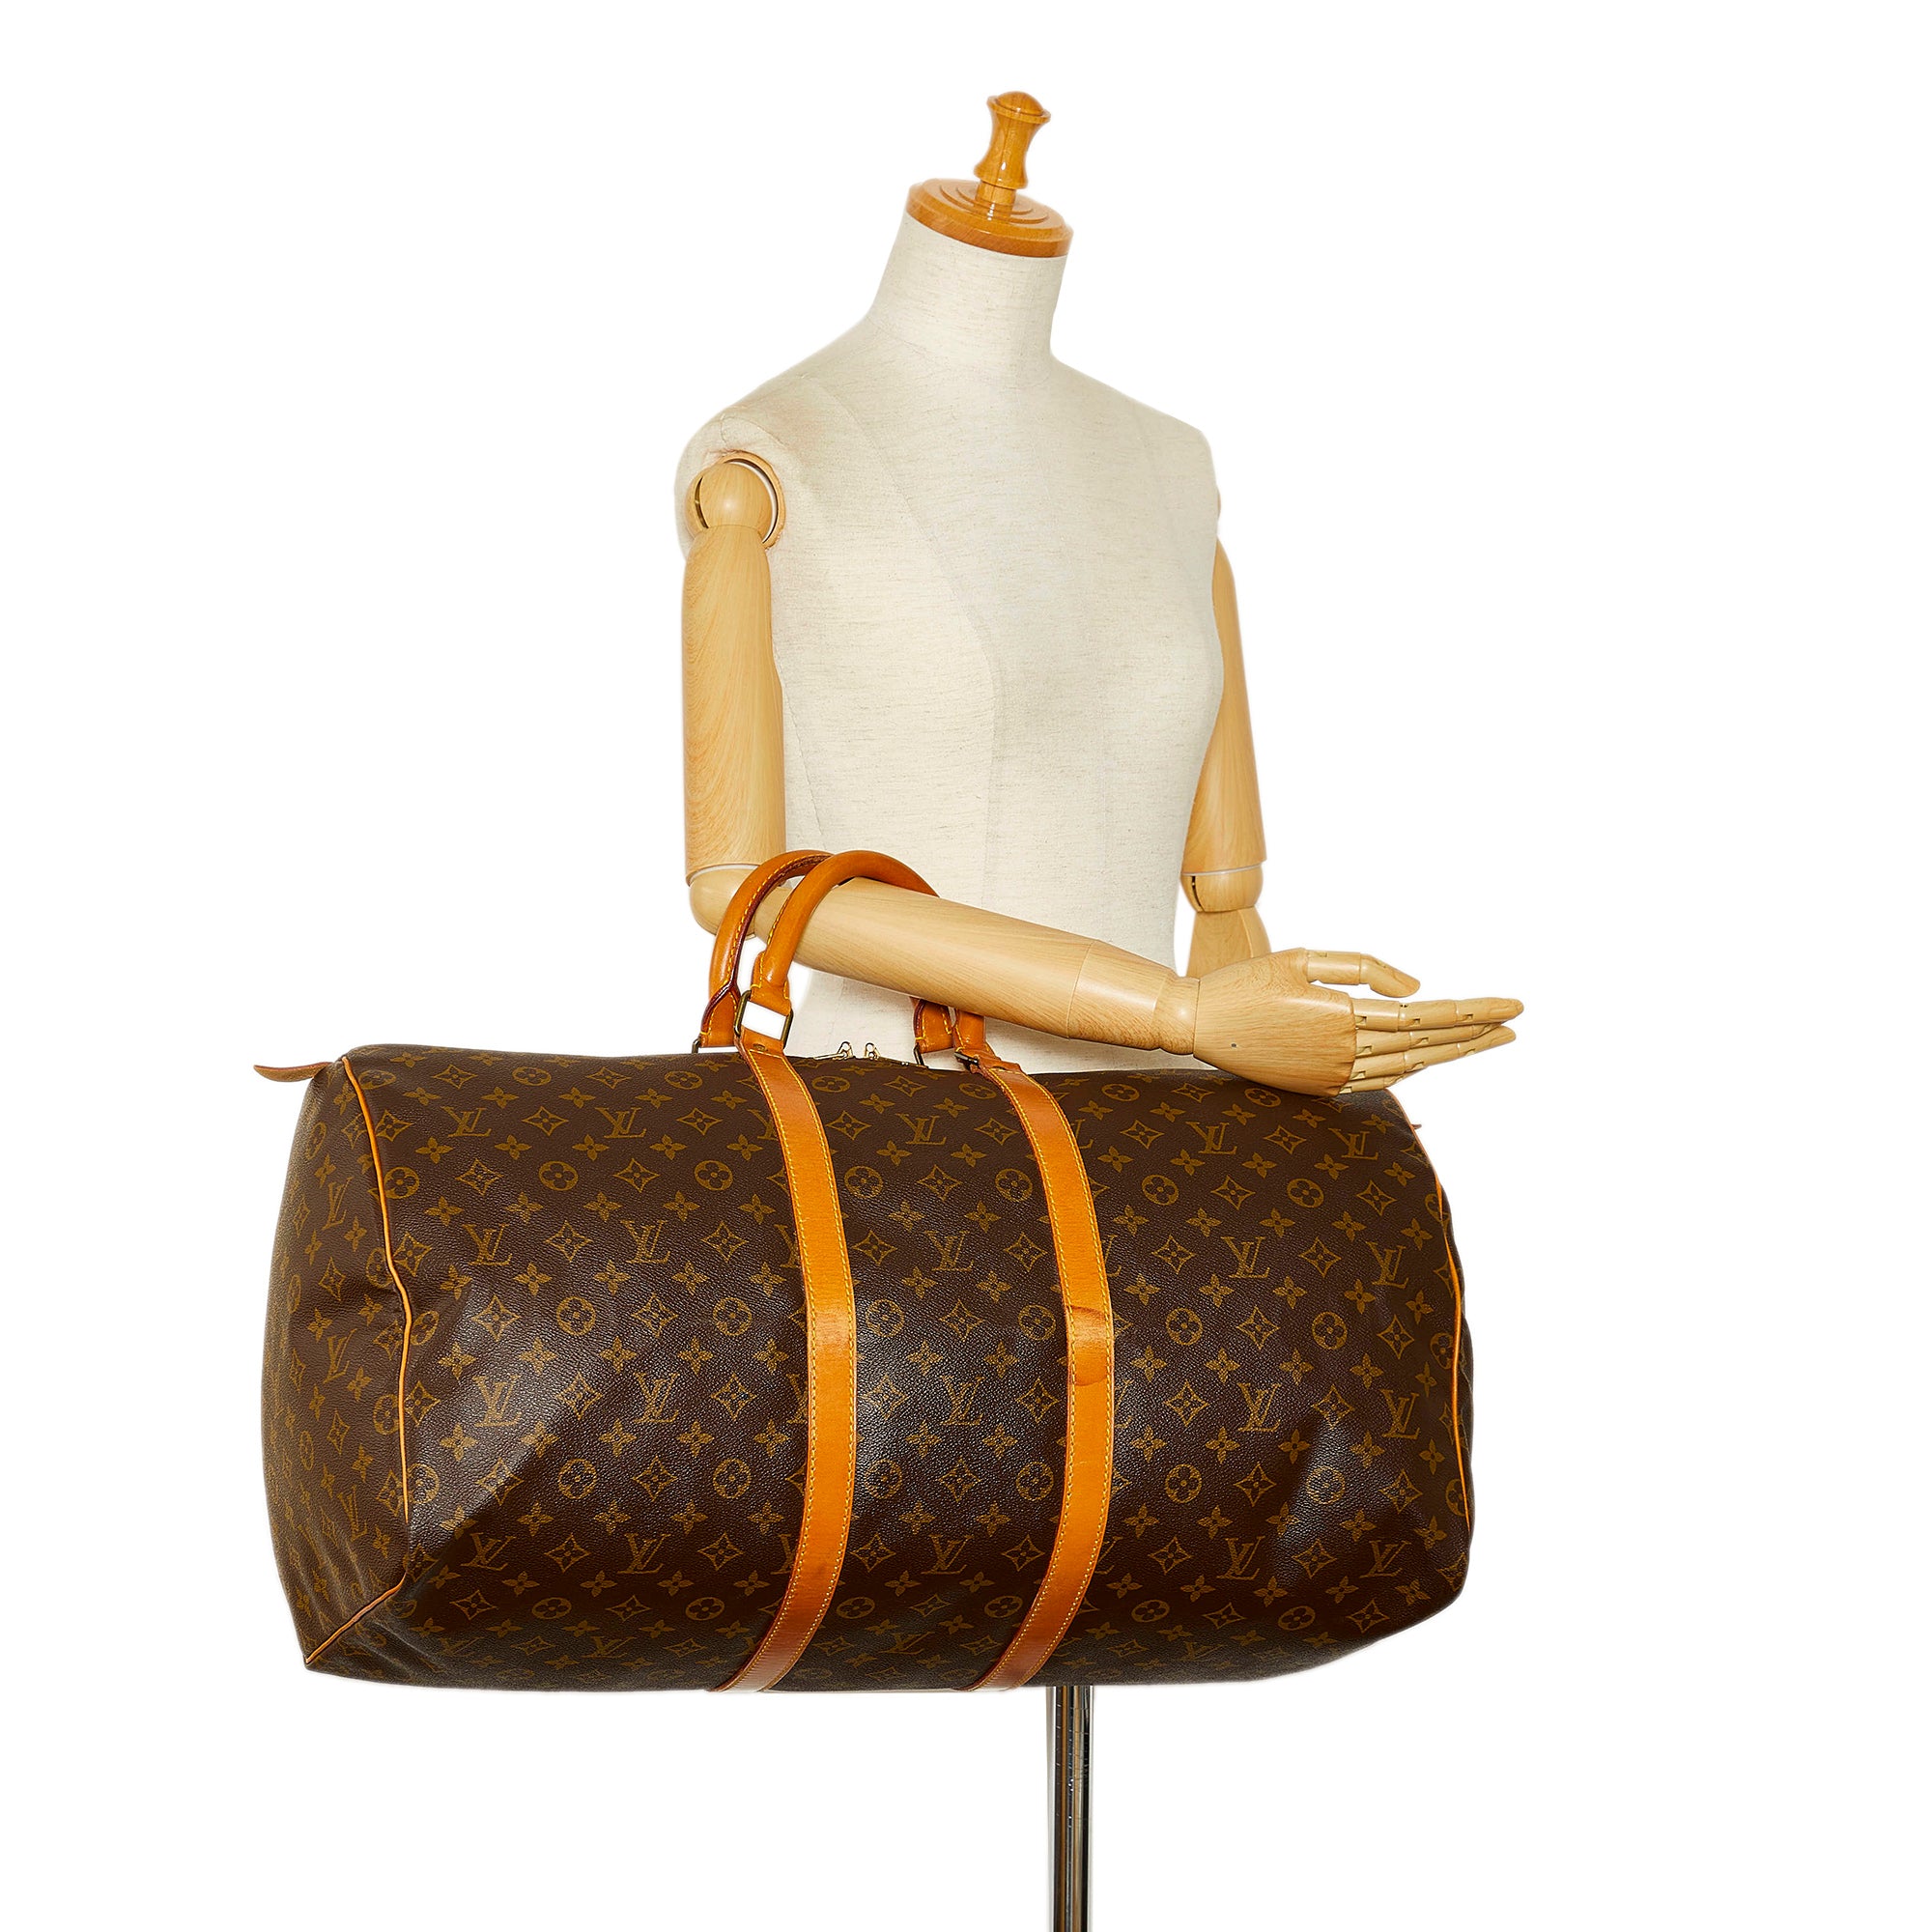 Louis Vuitton Keepall 50 vs 55 - Pretty Simple Bags